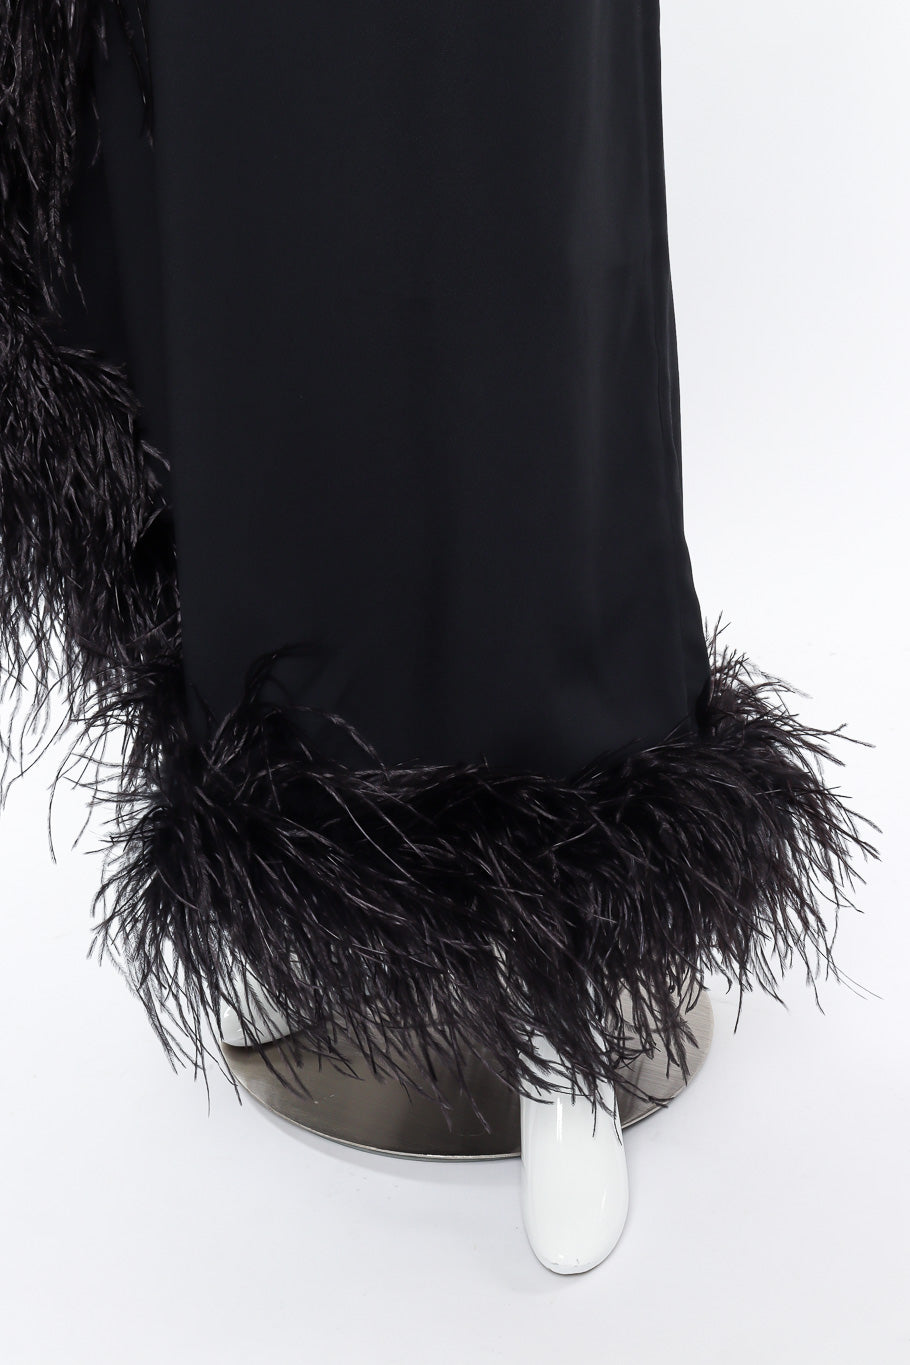 Taller Marmo Ubud One-Shoulder Feather Gown hem closeup @Recessla